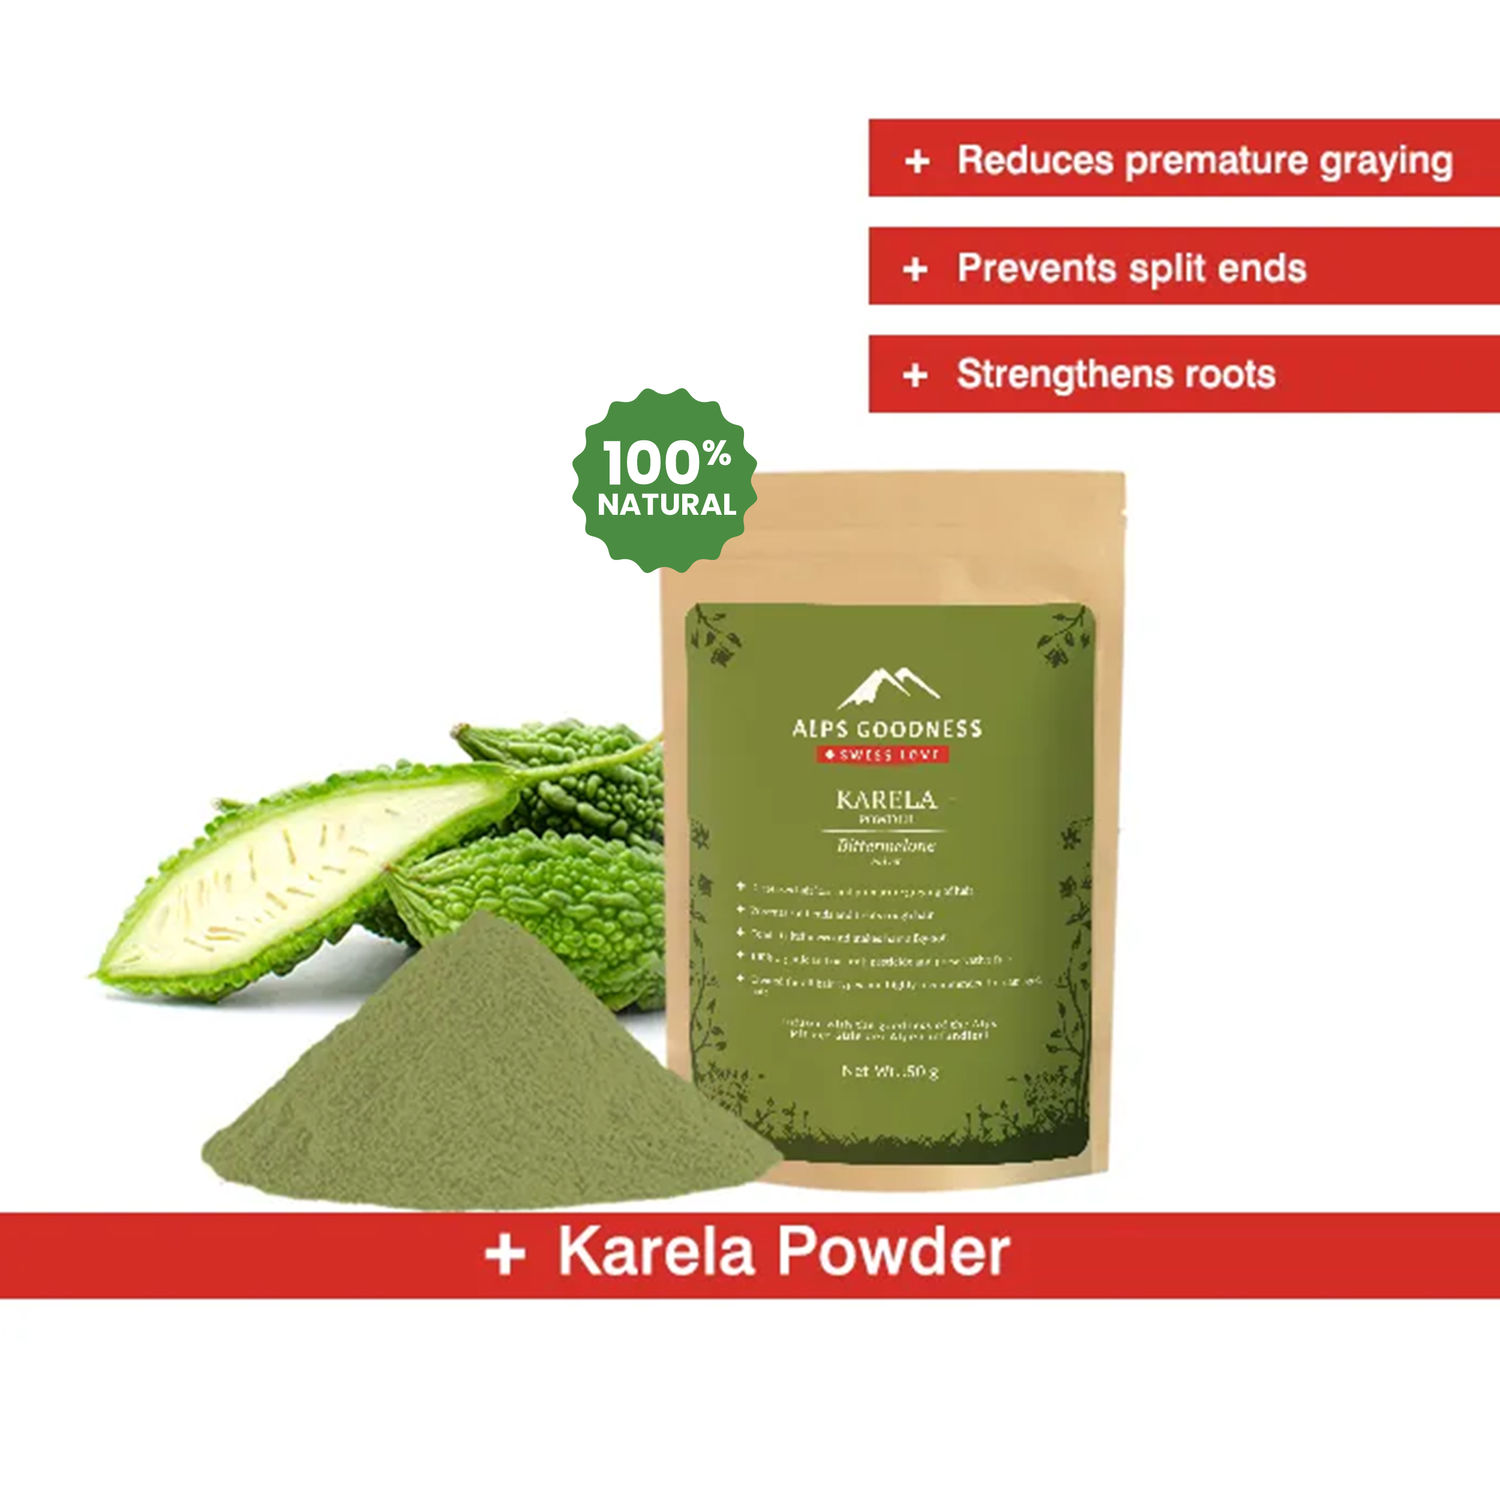 Buy Alps Goodness Powder - Karela (50 g) - Purplle